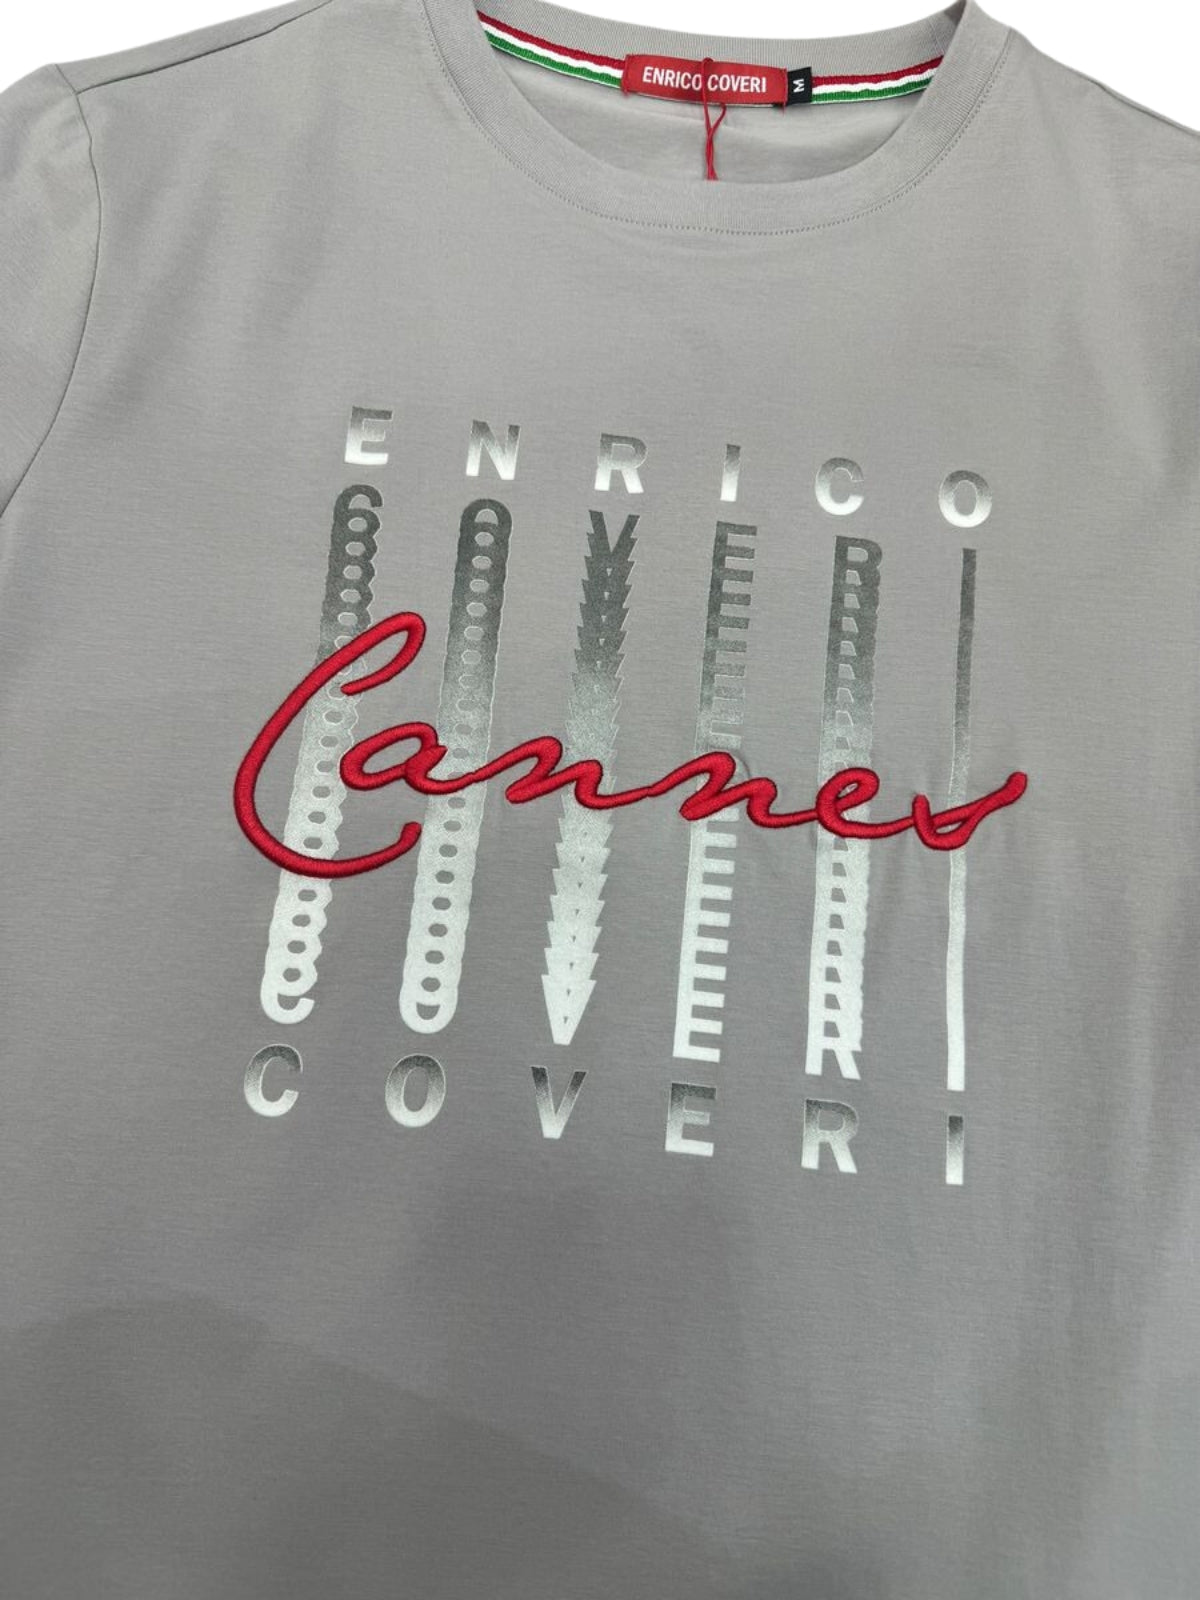 Enrico T-Shirt Center Logo Gray Red